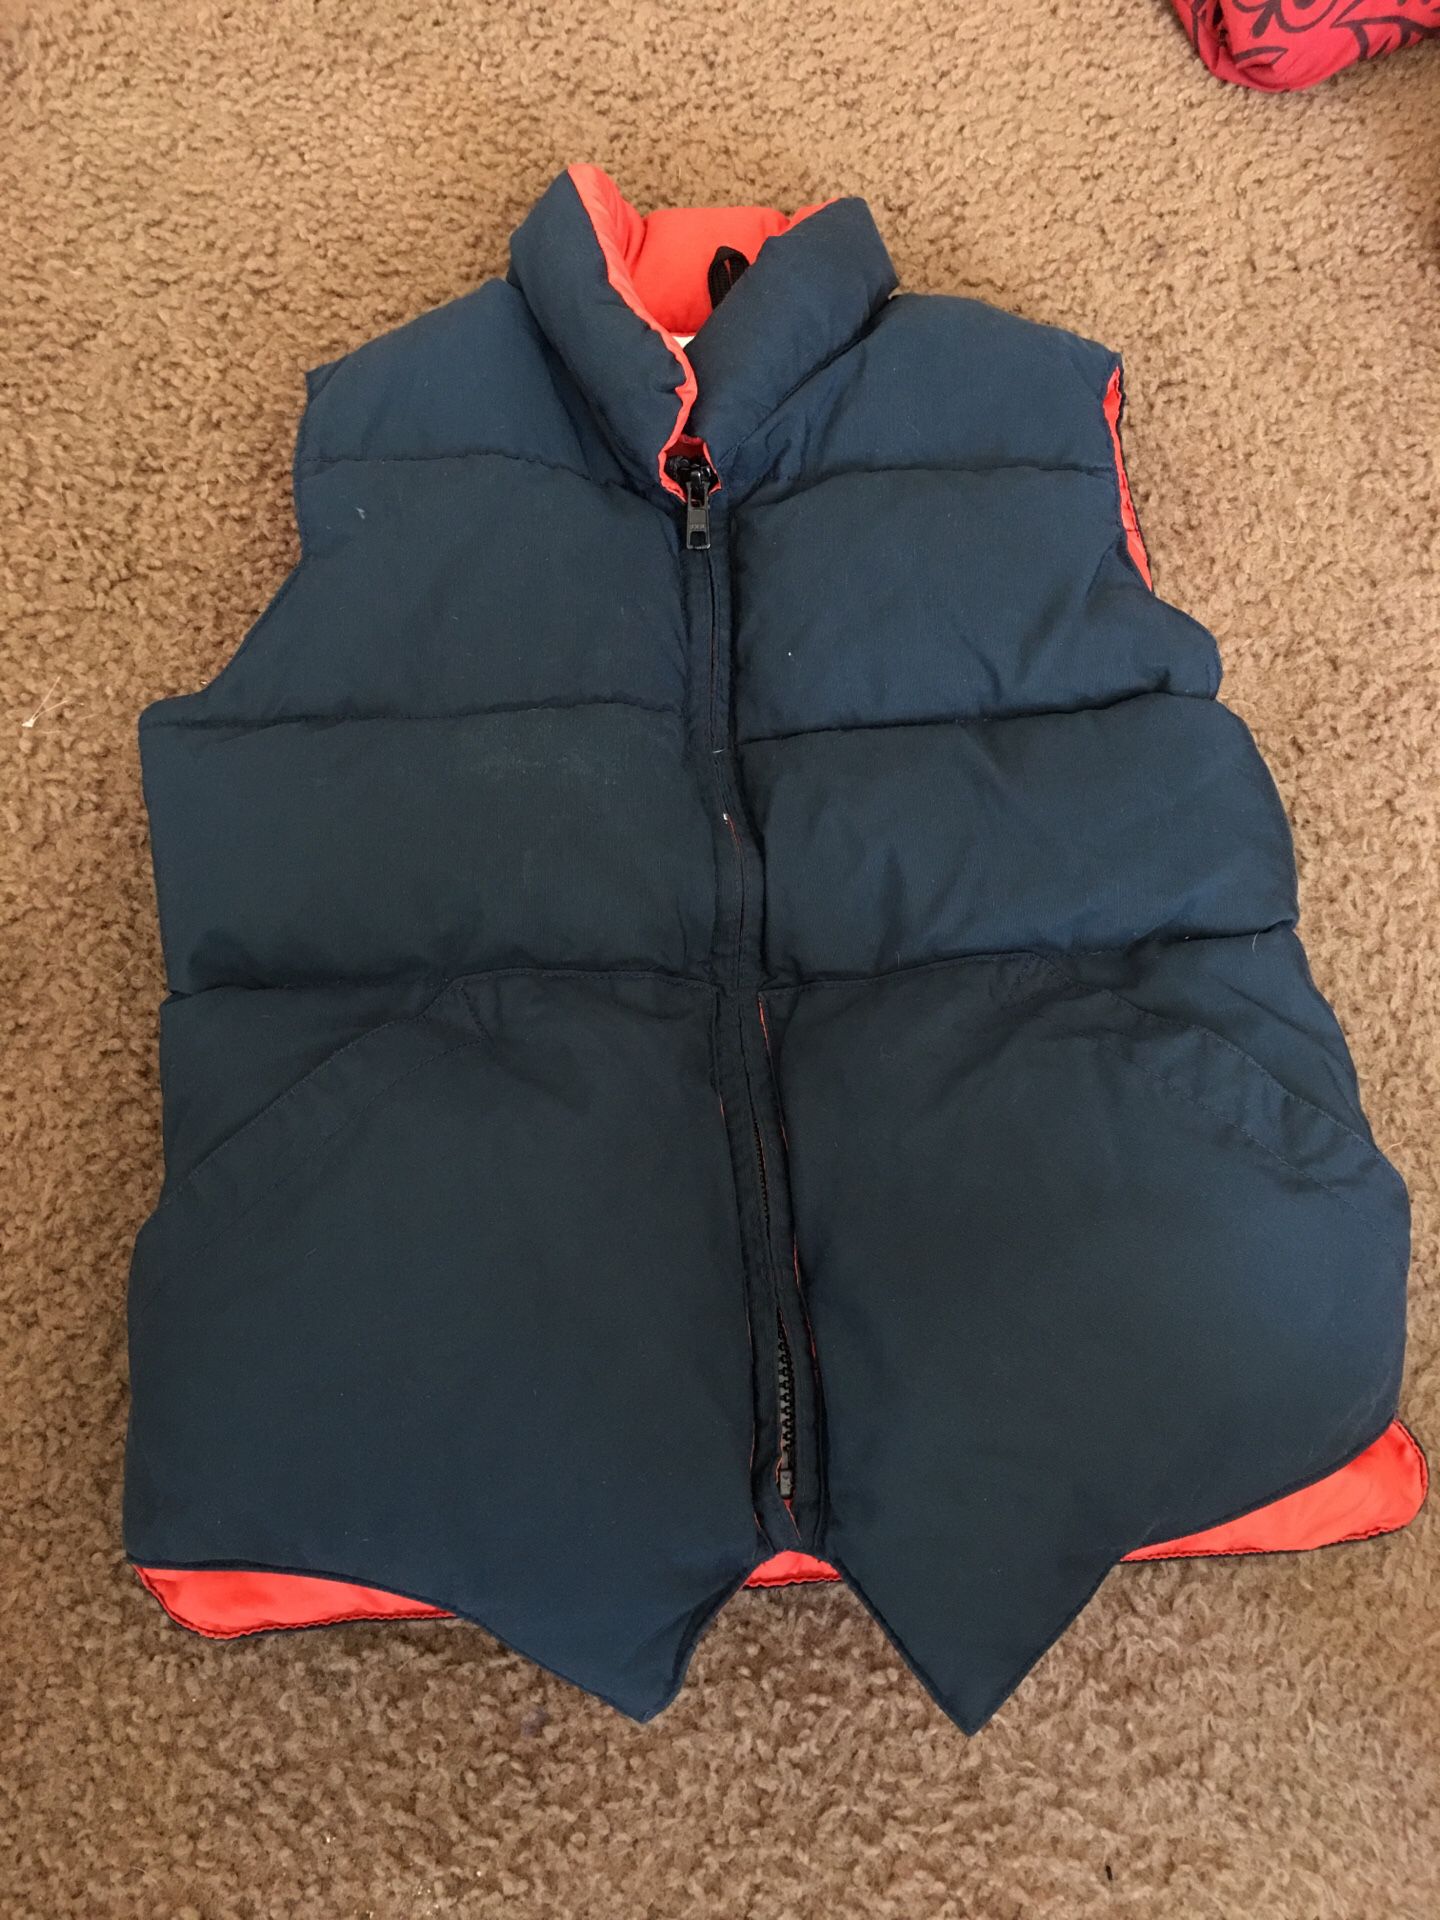 Navy blue puffer vest Size 10